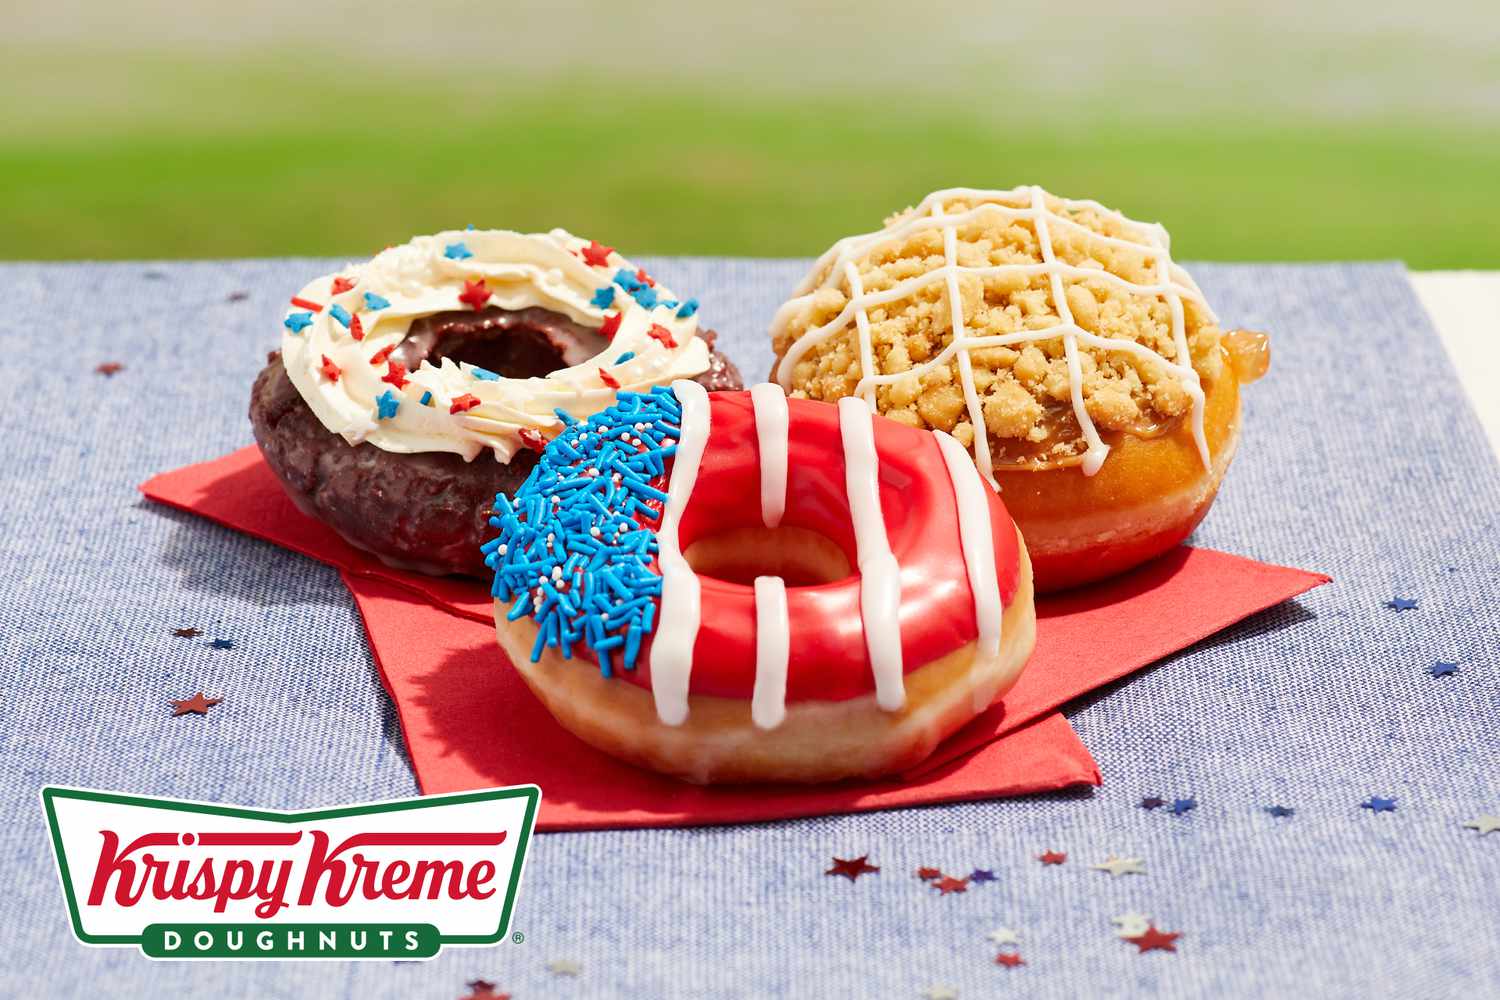 Krispy Kreme's Patriotic Celebration, New Doughnuts and Freebies for July 4th